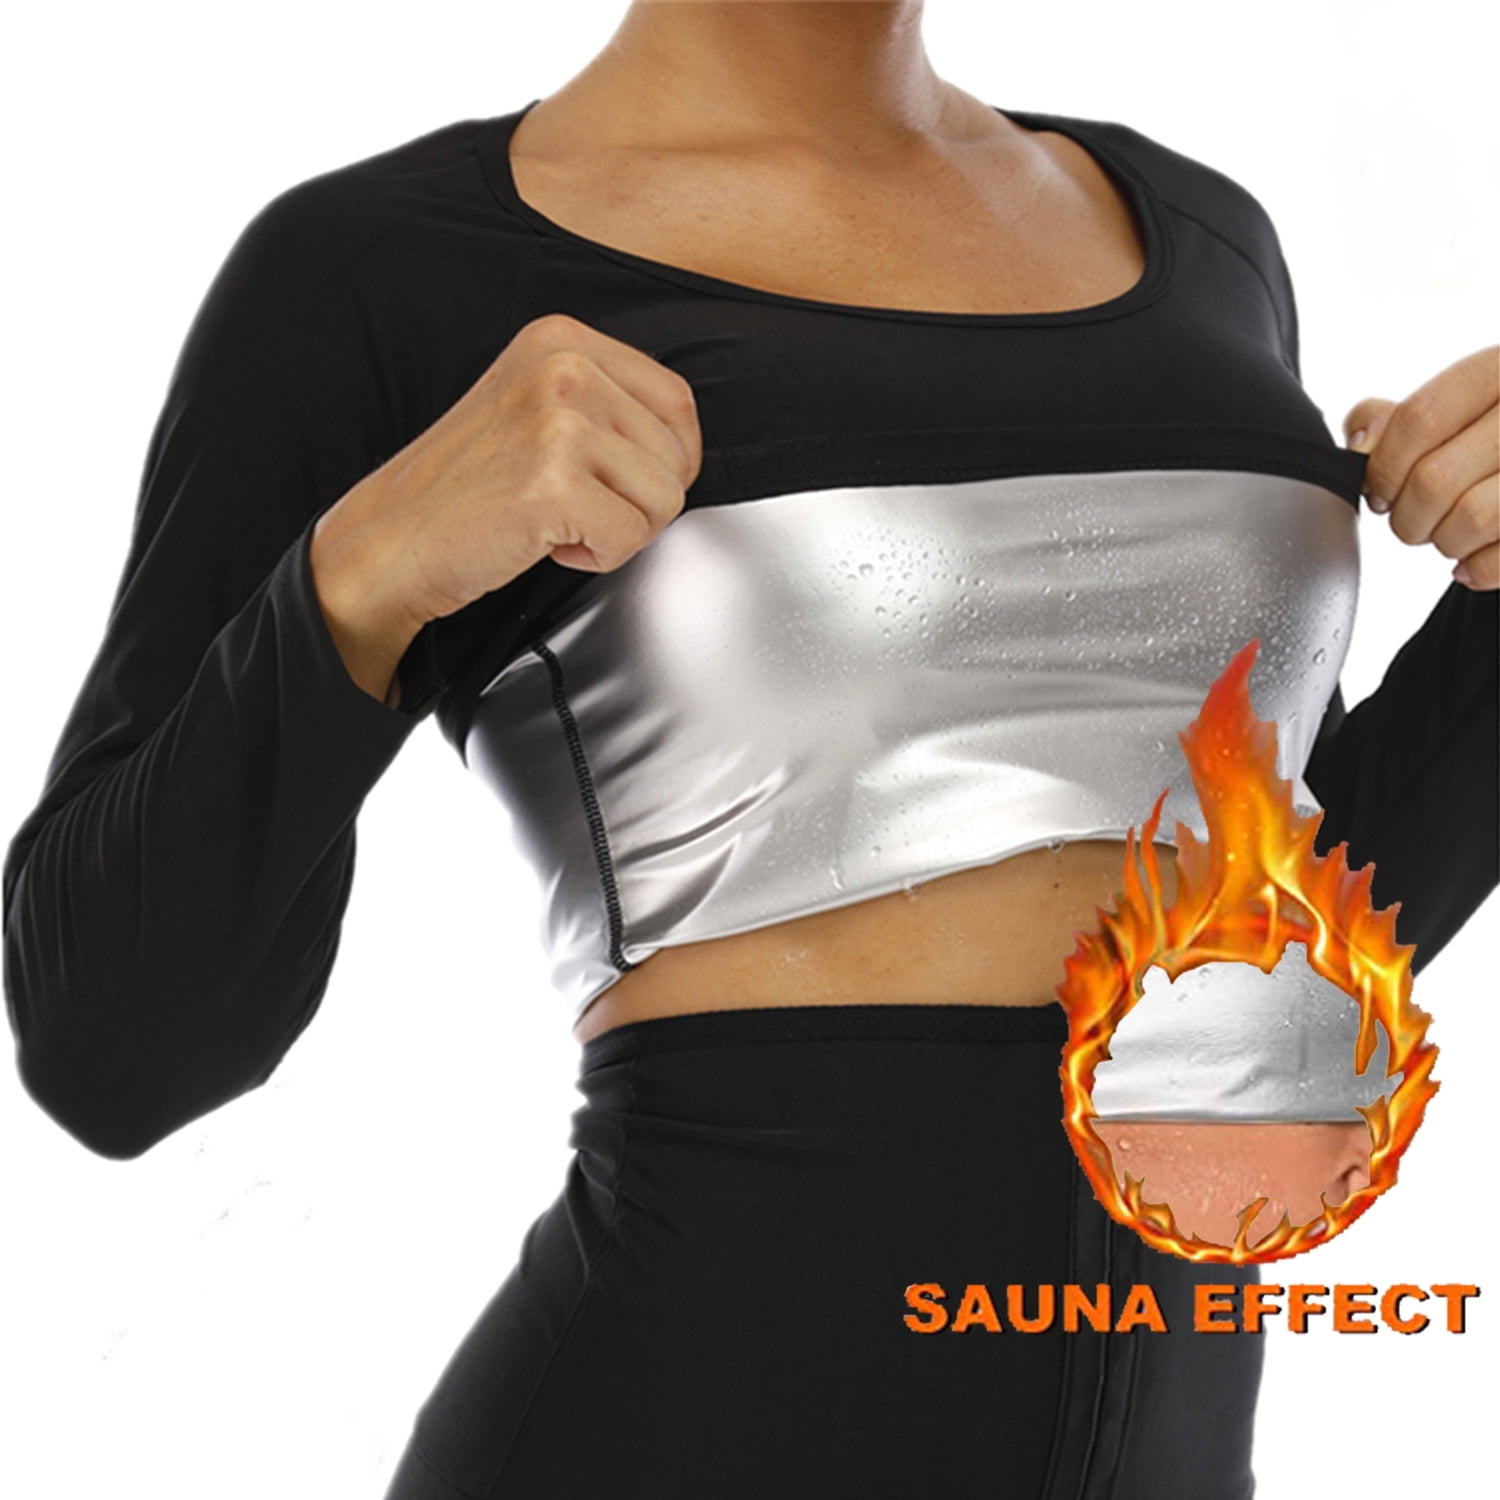 Slimming Sauna HOT Long Short Sleeve Shirt Top Weight Loss Exercise Sauna Suit 